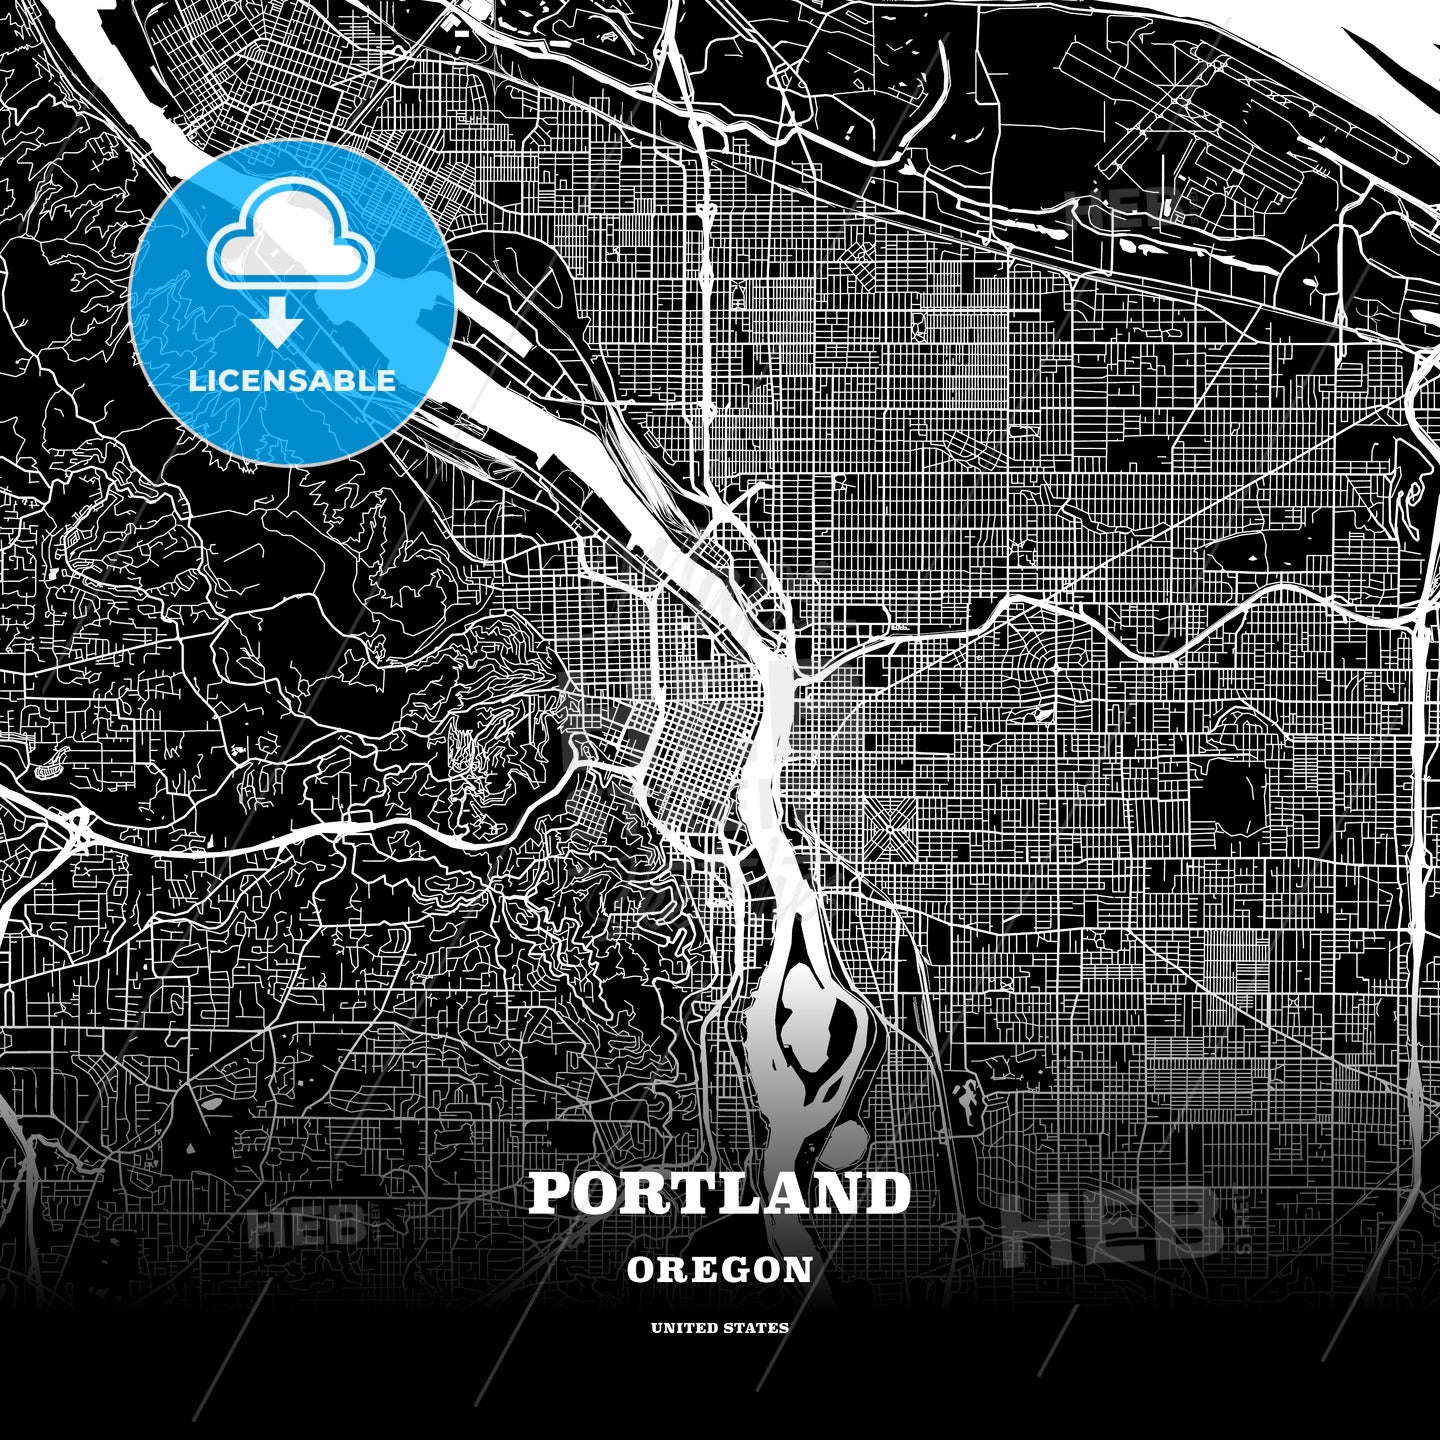 Portland, Oregon, USA map